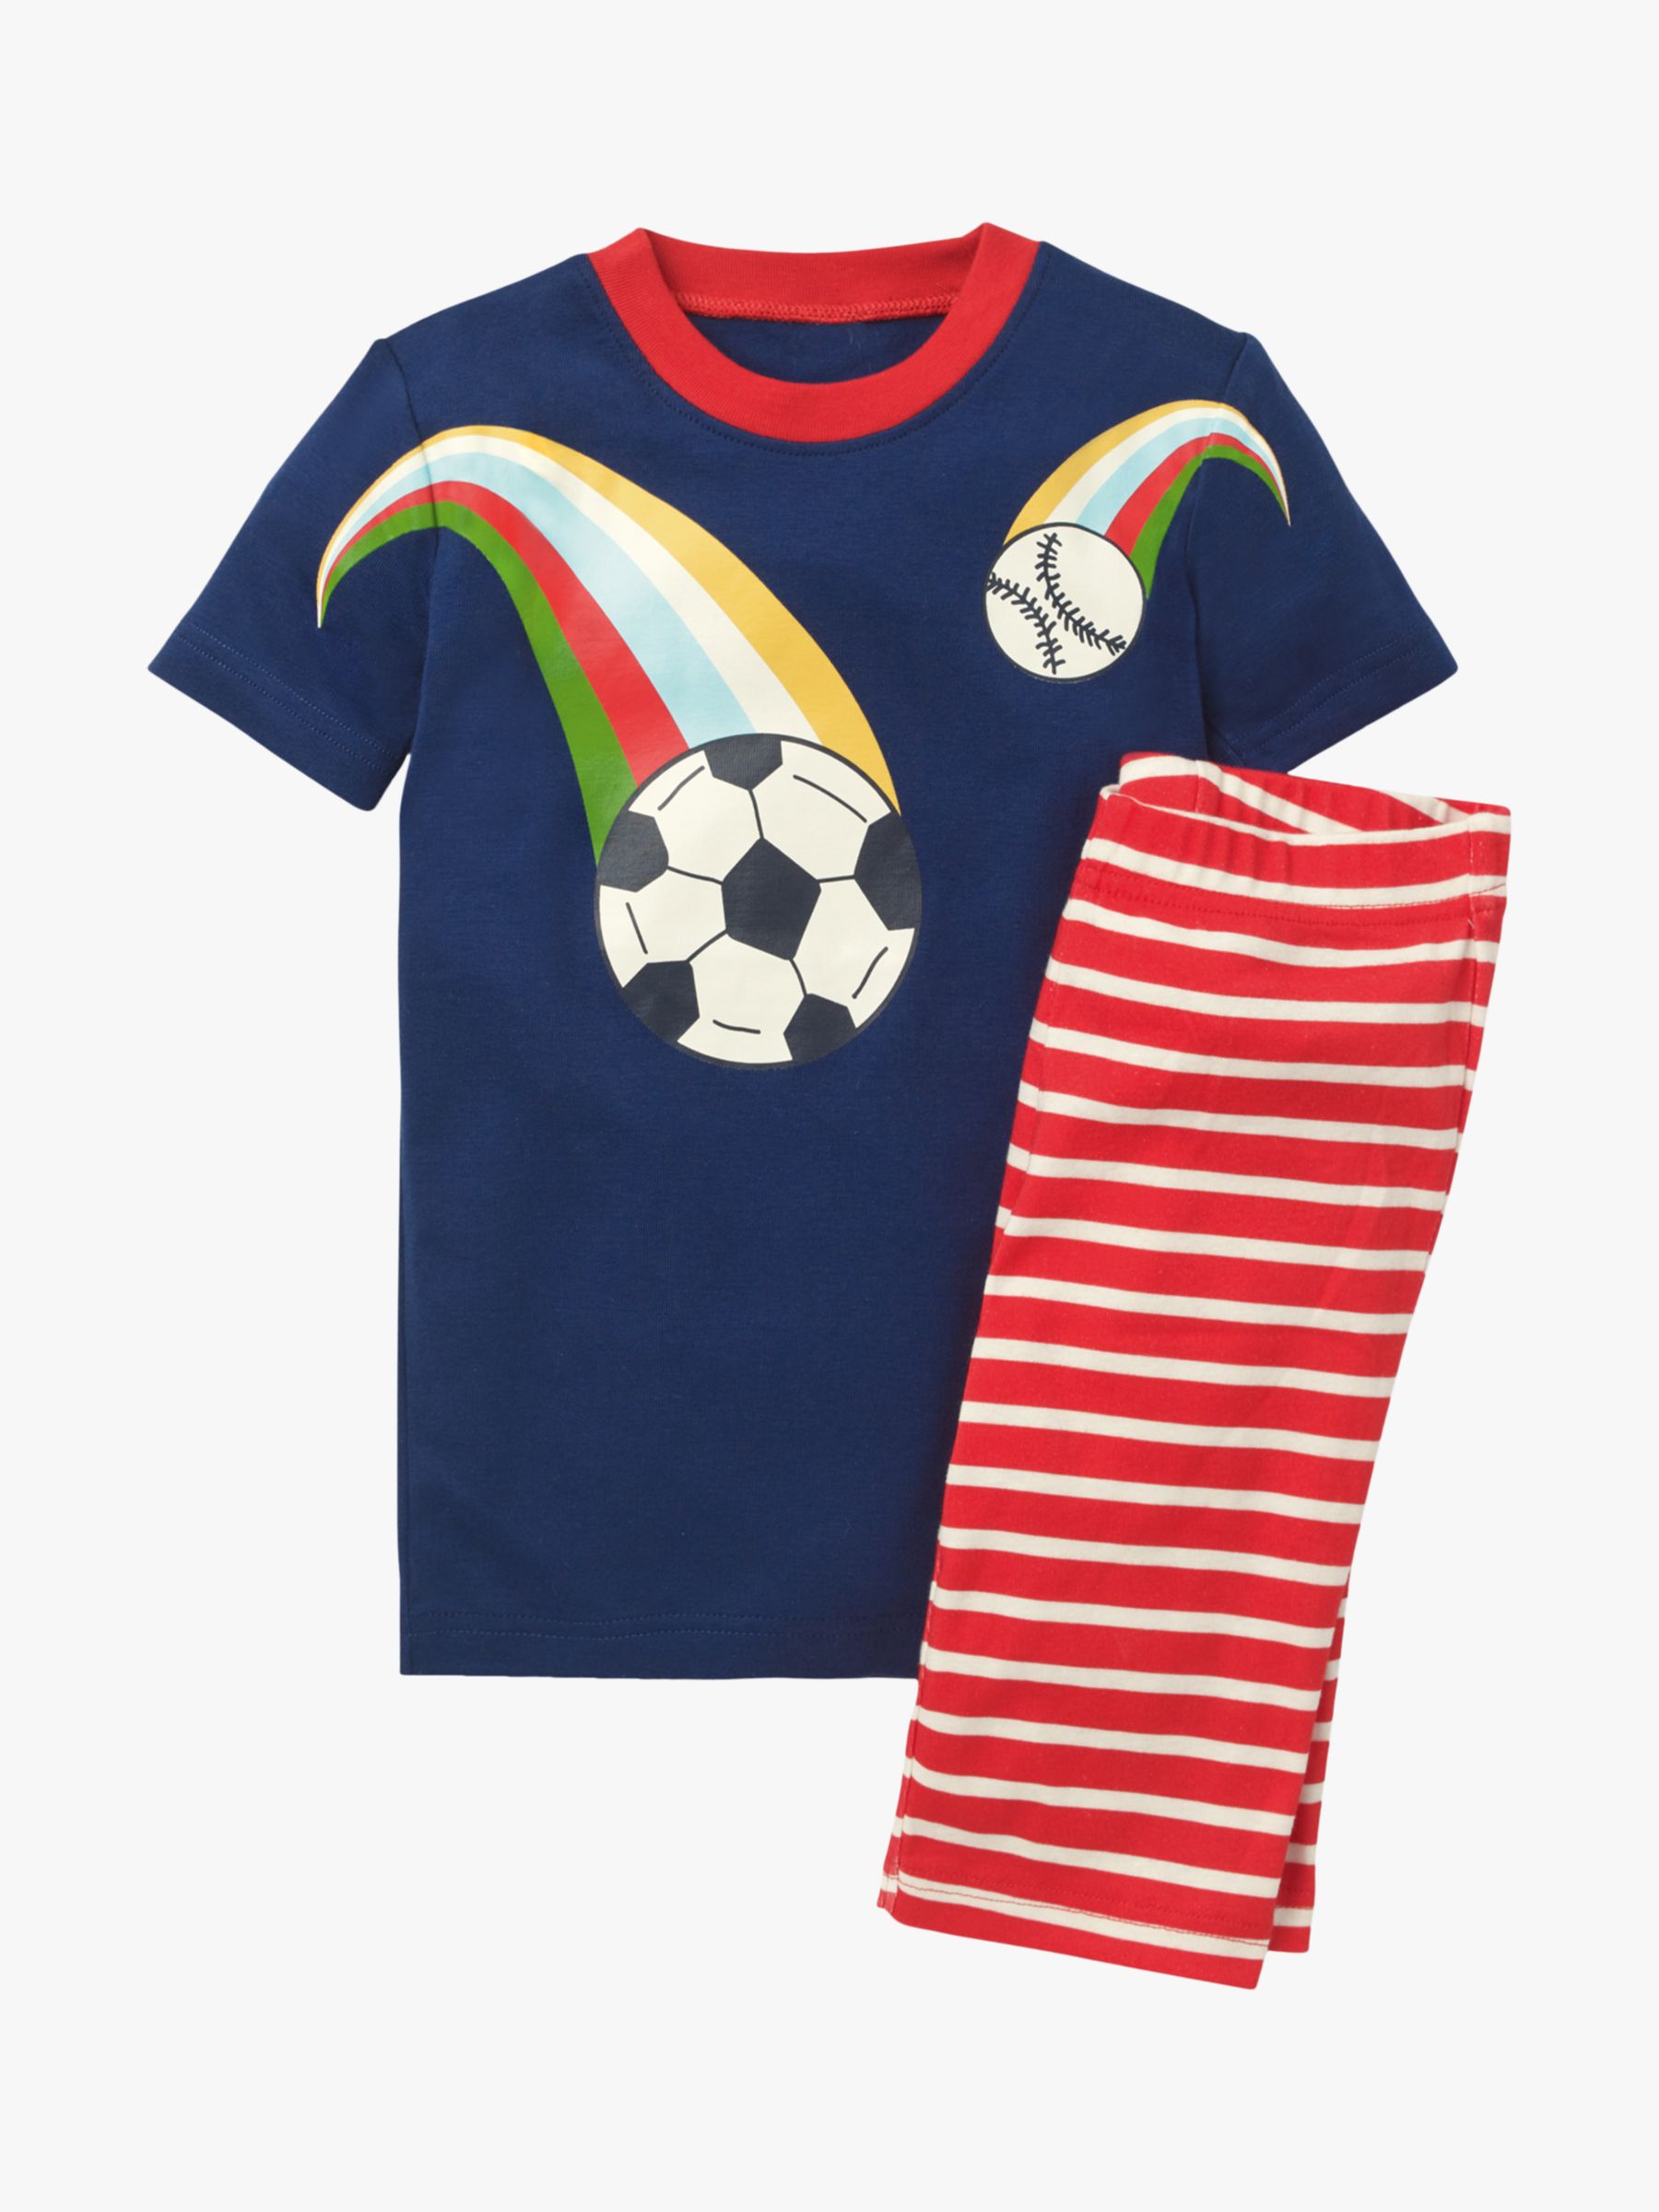 Mini Boden Boys' Football Pyjamas, Blue/Red